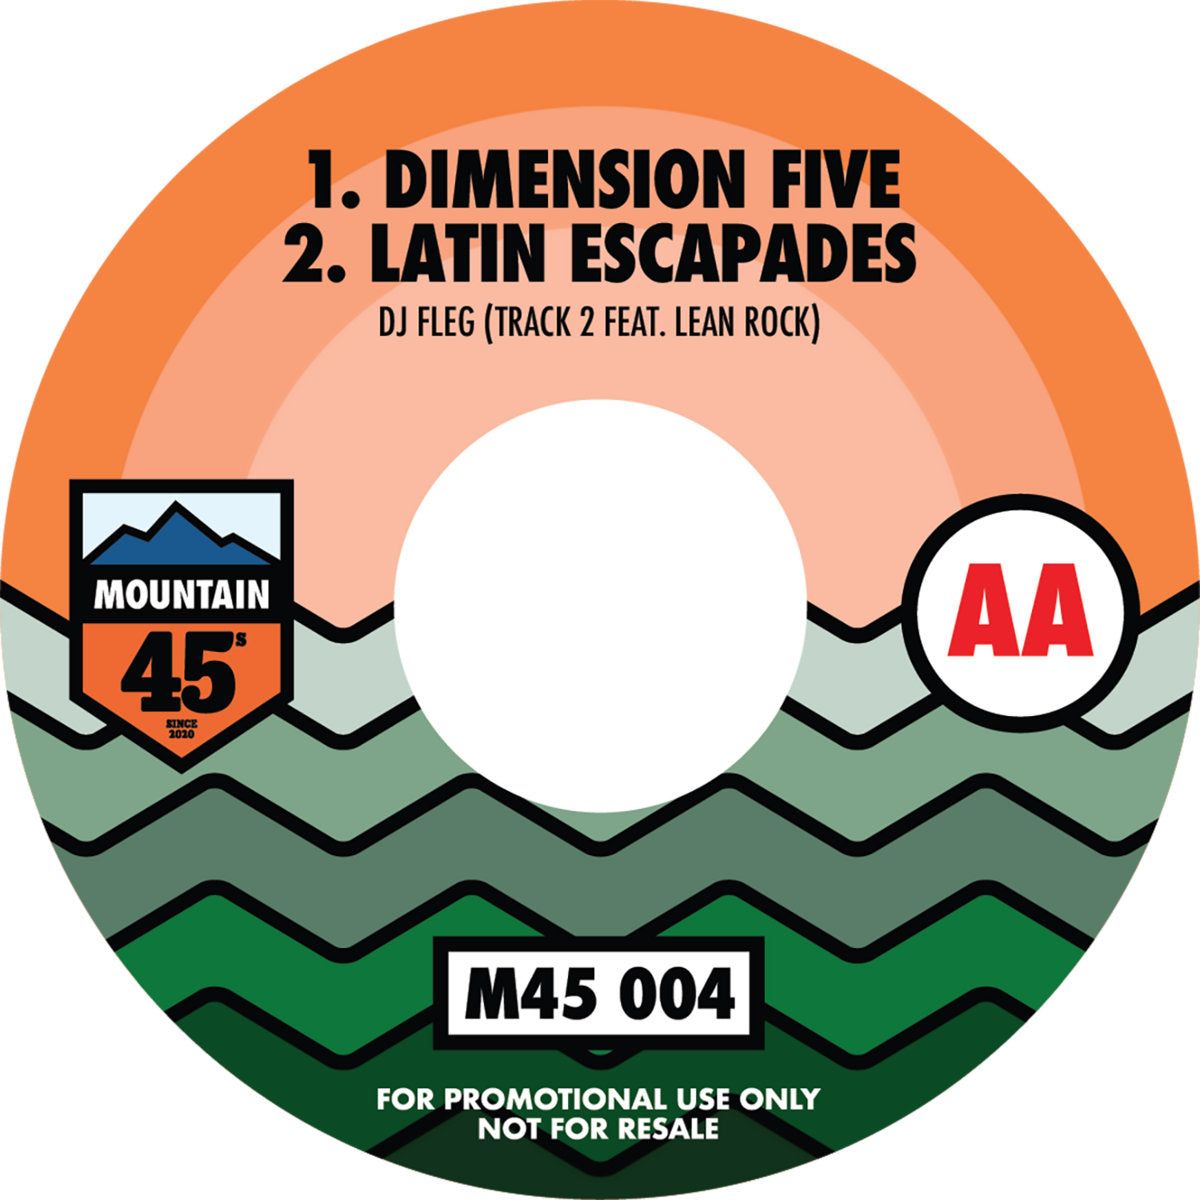 Double A - The Game b/w DJ Fleg - Dimension Five & Latin Escapades